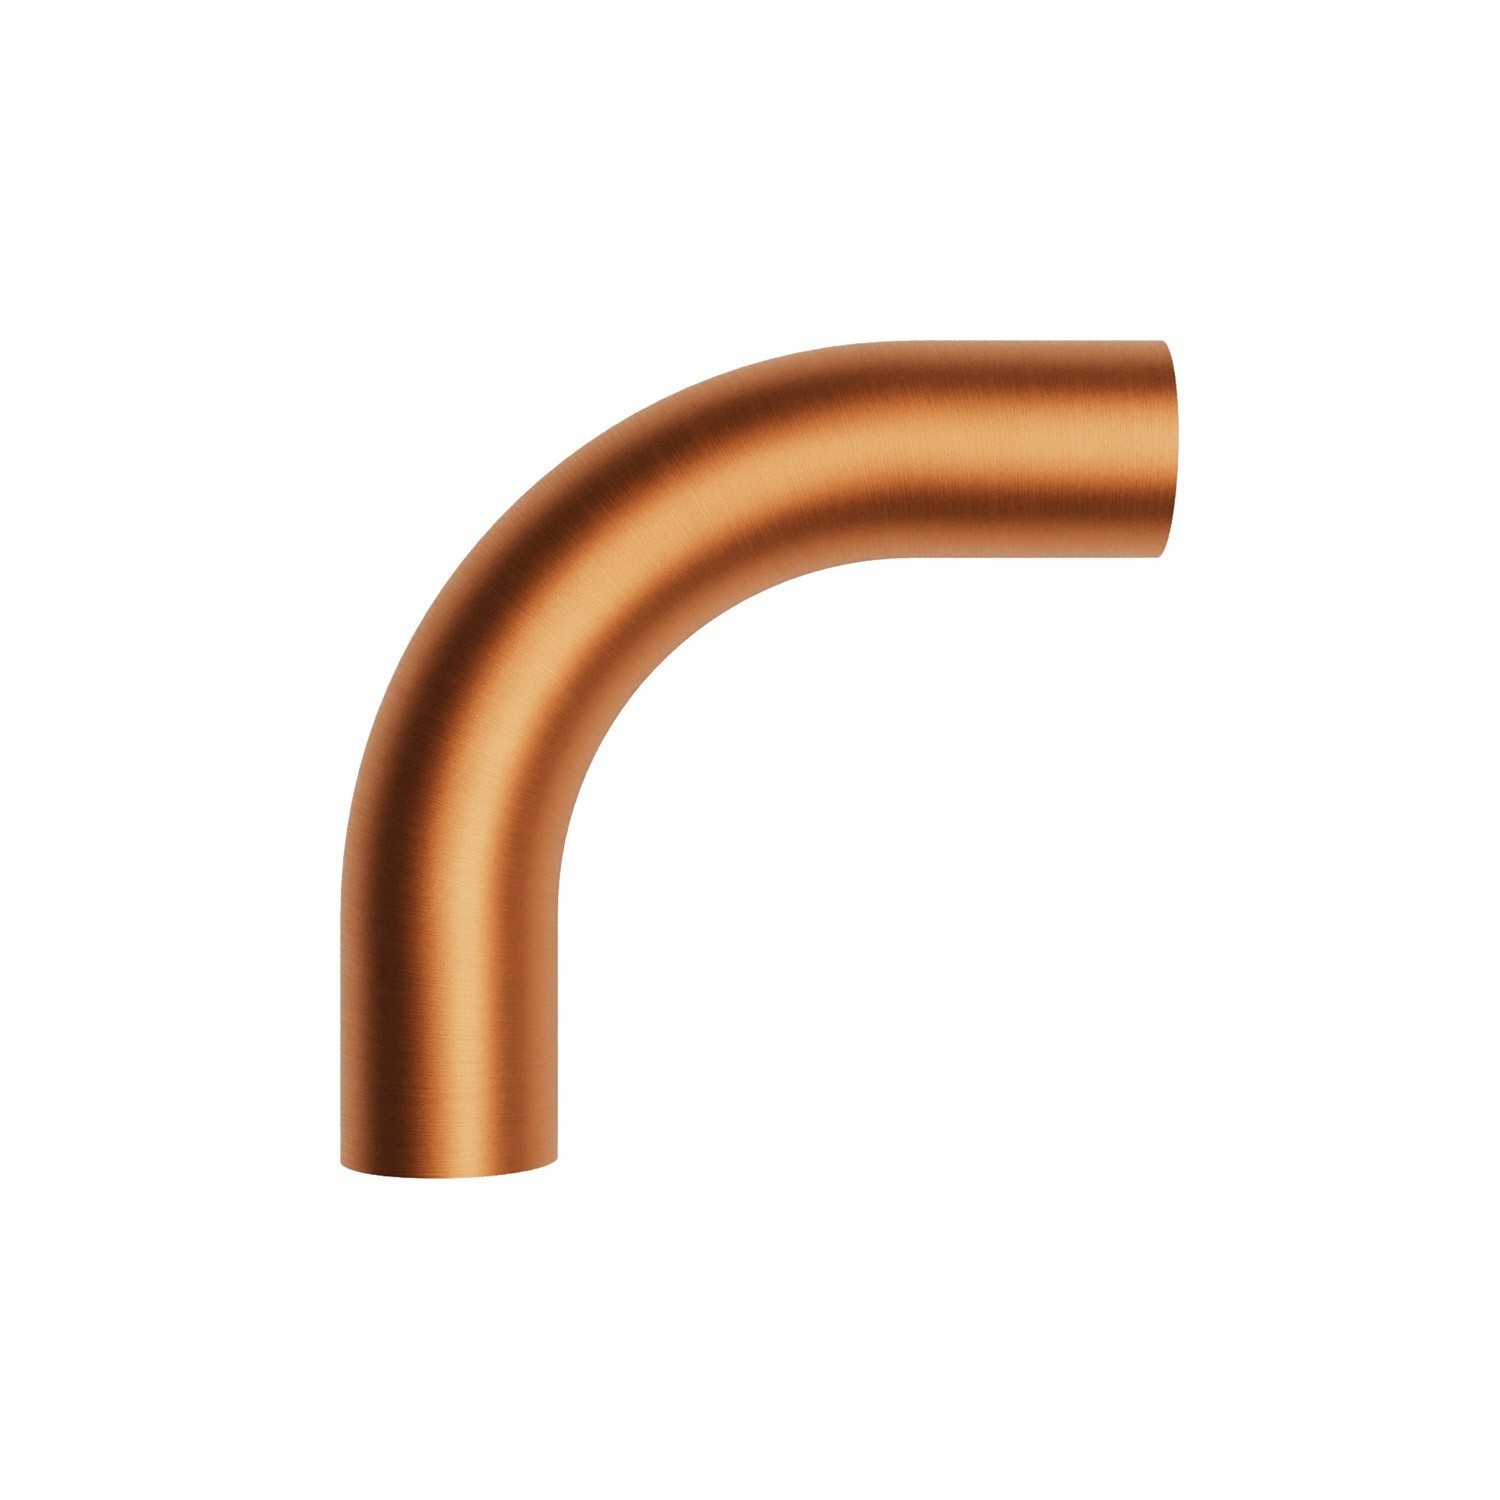 5-cm bent metal extension tube